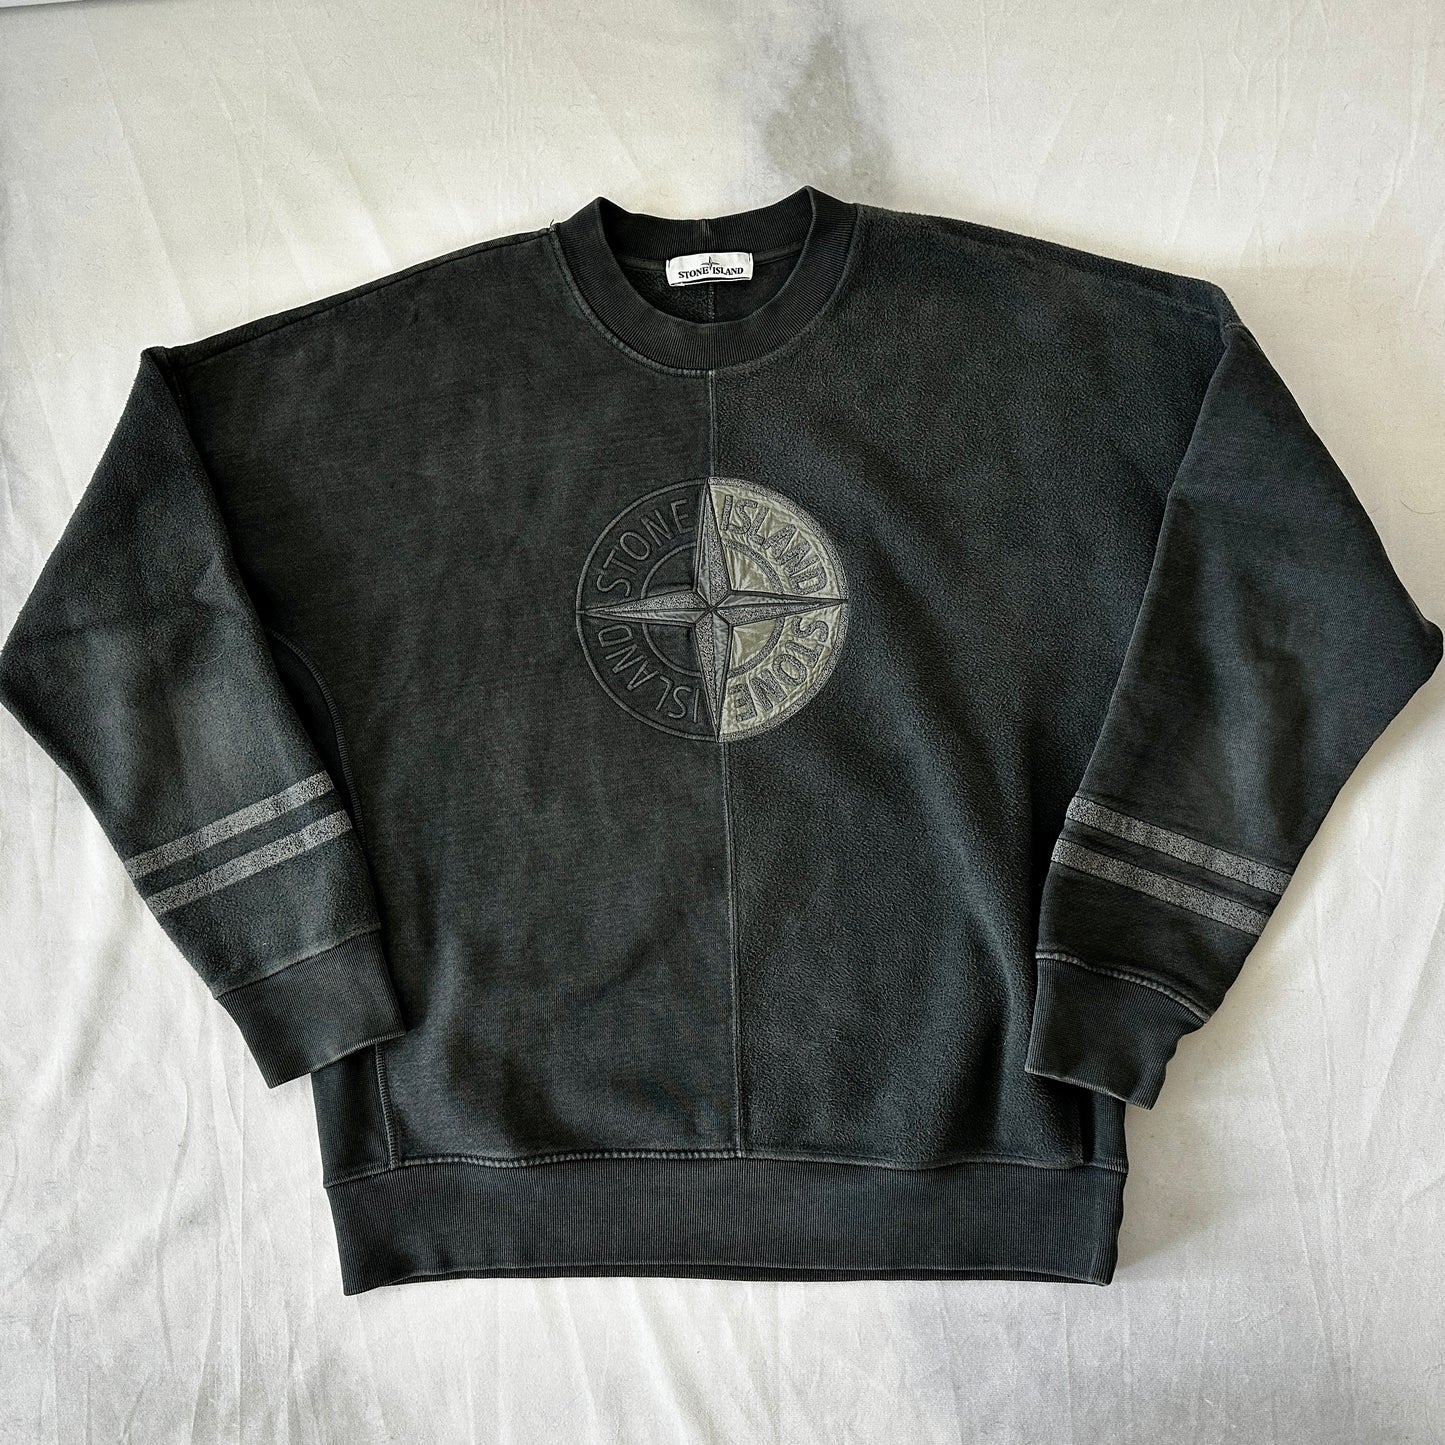 Stone Island Old Dye Treatment Sweatshirt 2019 - XL